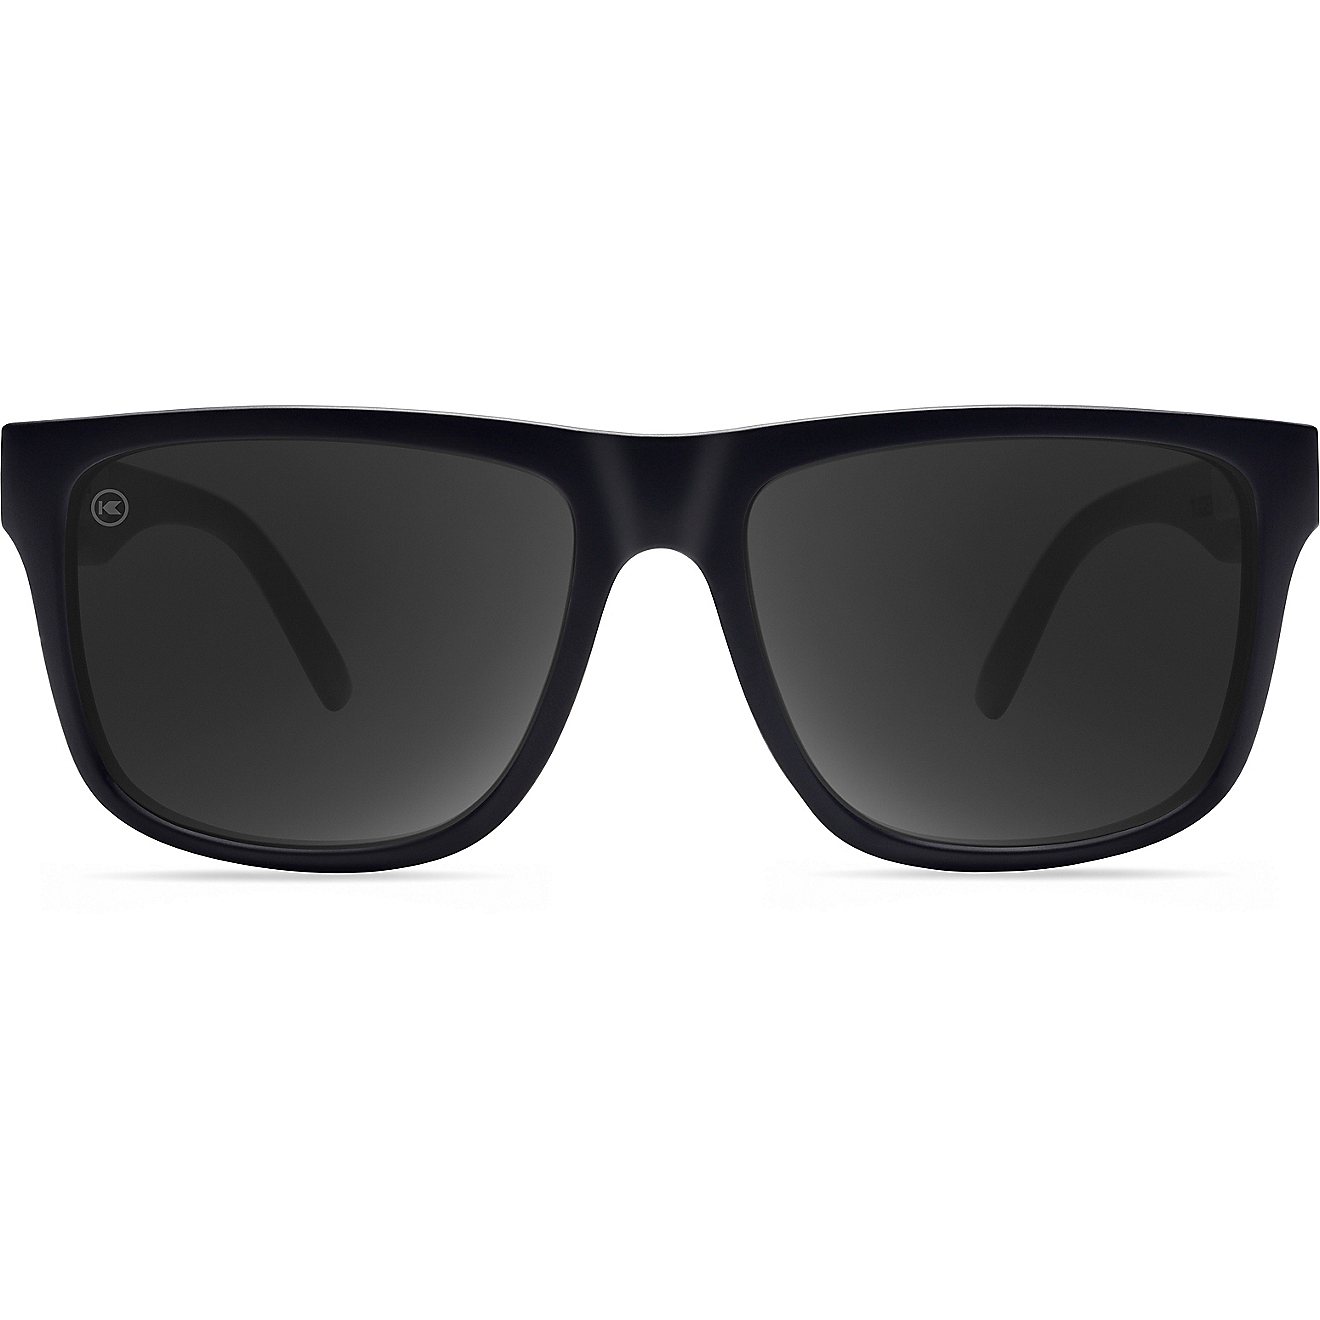 Knockaround Torrey Pines Sport Sunglasses                                                                                        - view number 2